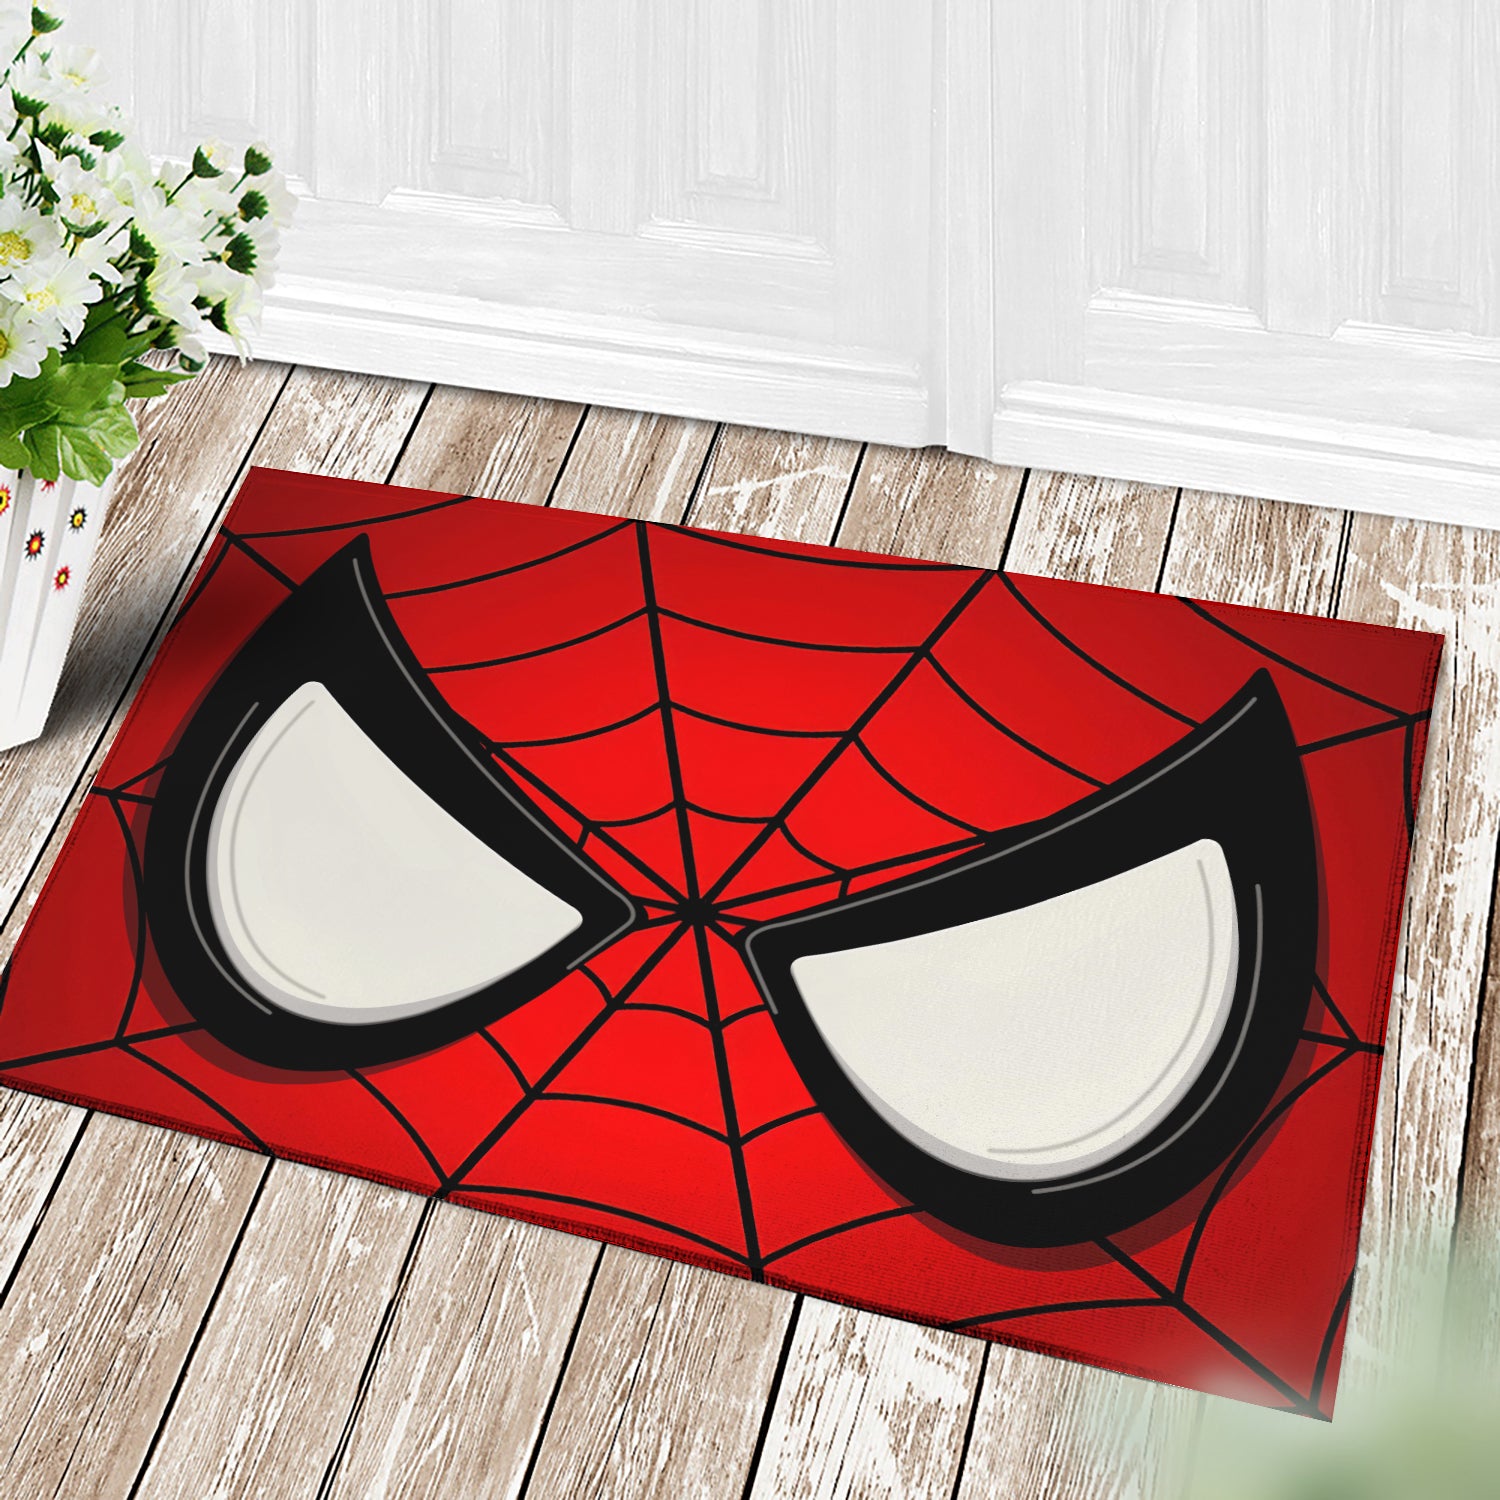 Spider Man Eyes Christmas Doormat Home Decor Nearkii